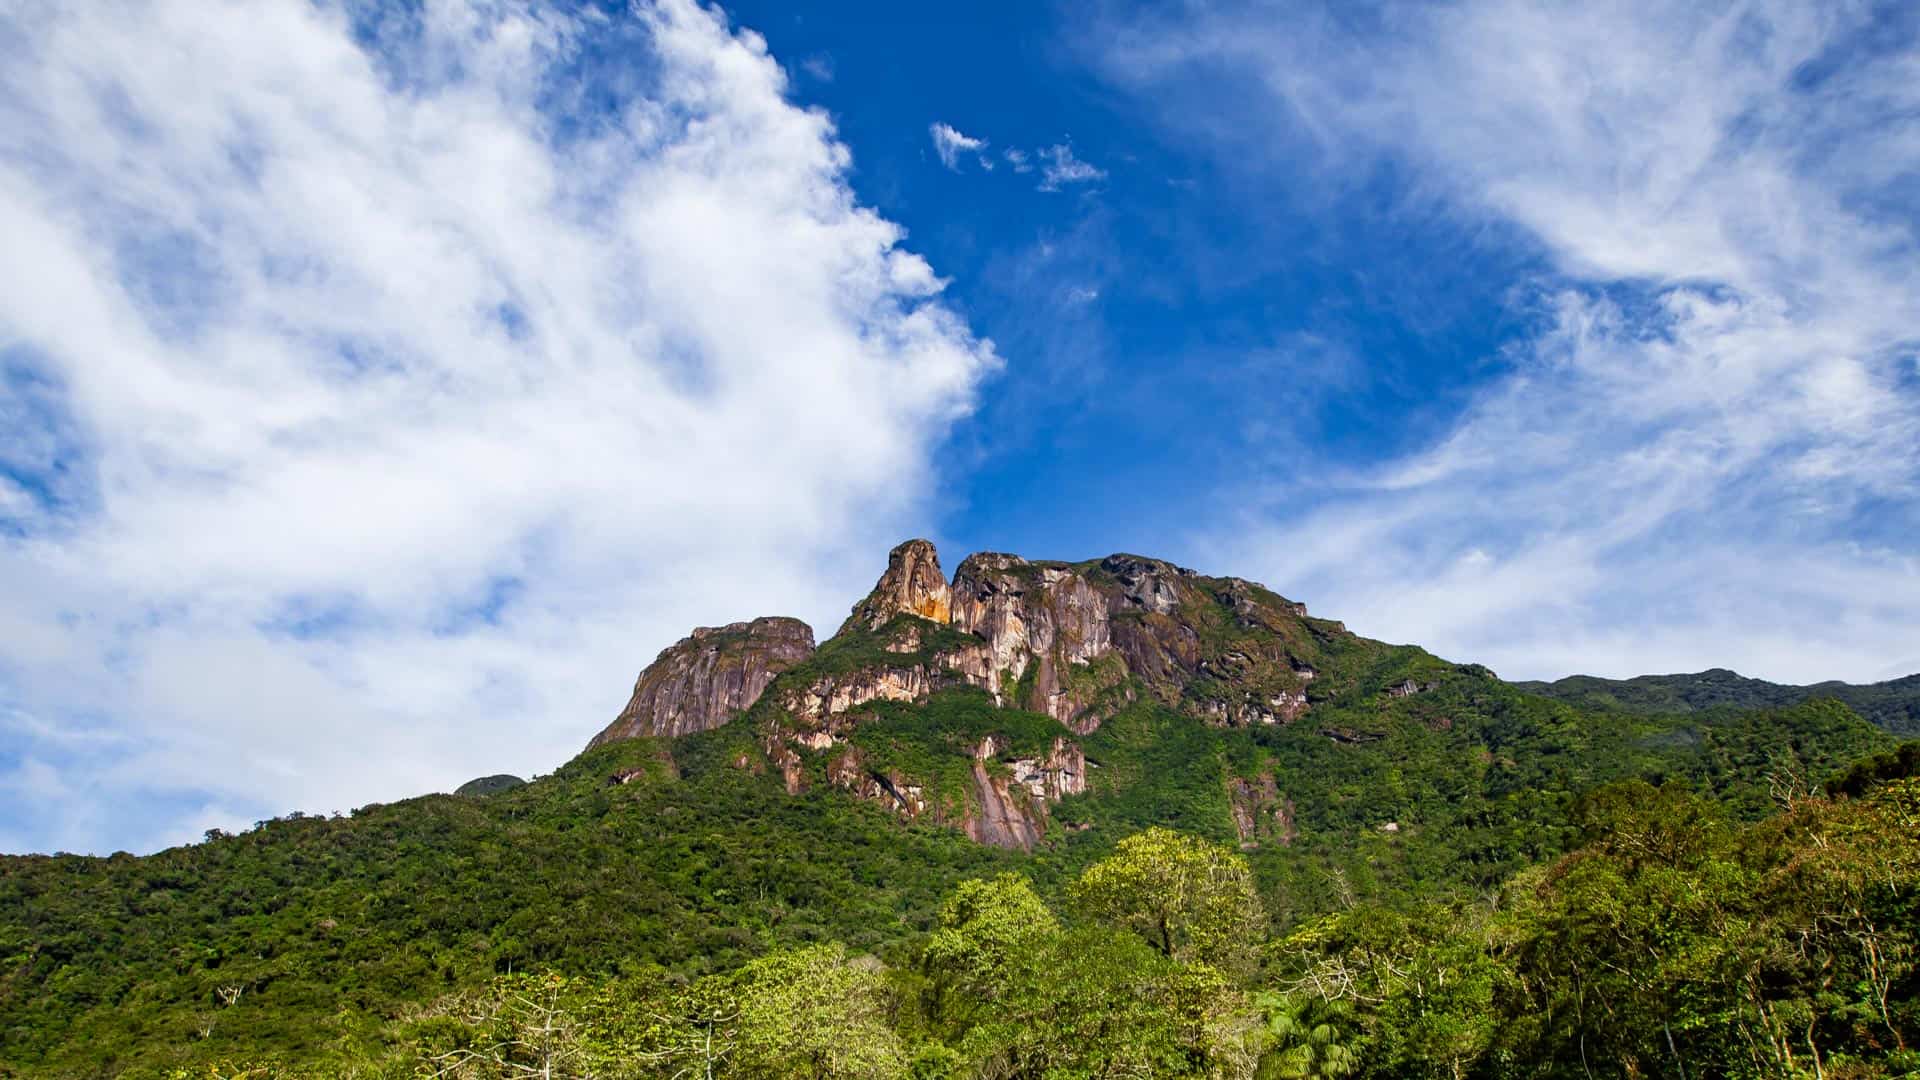 Mountain in Marumbi National Park